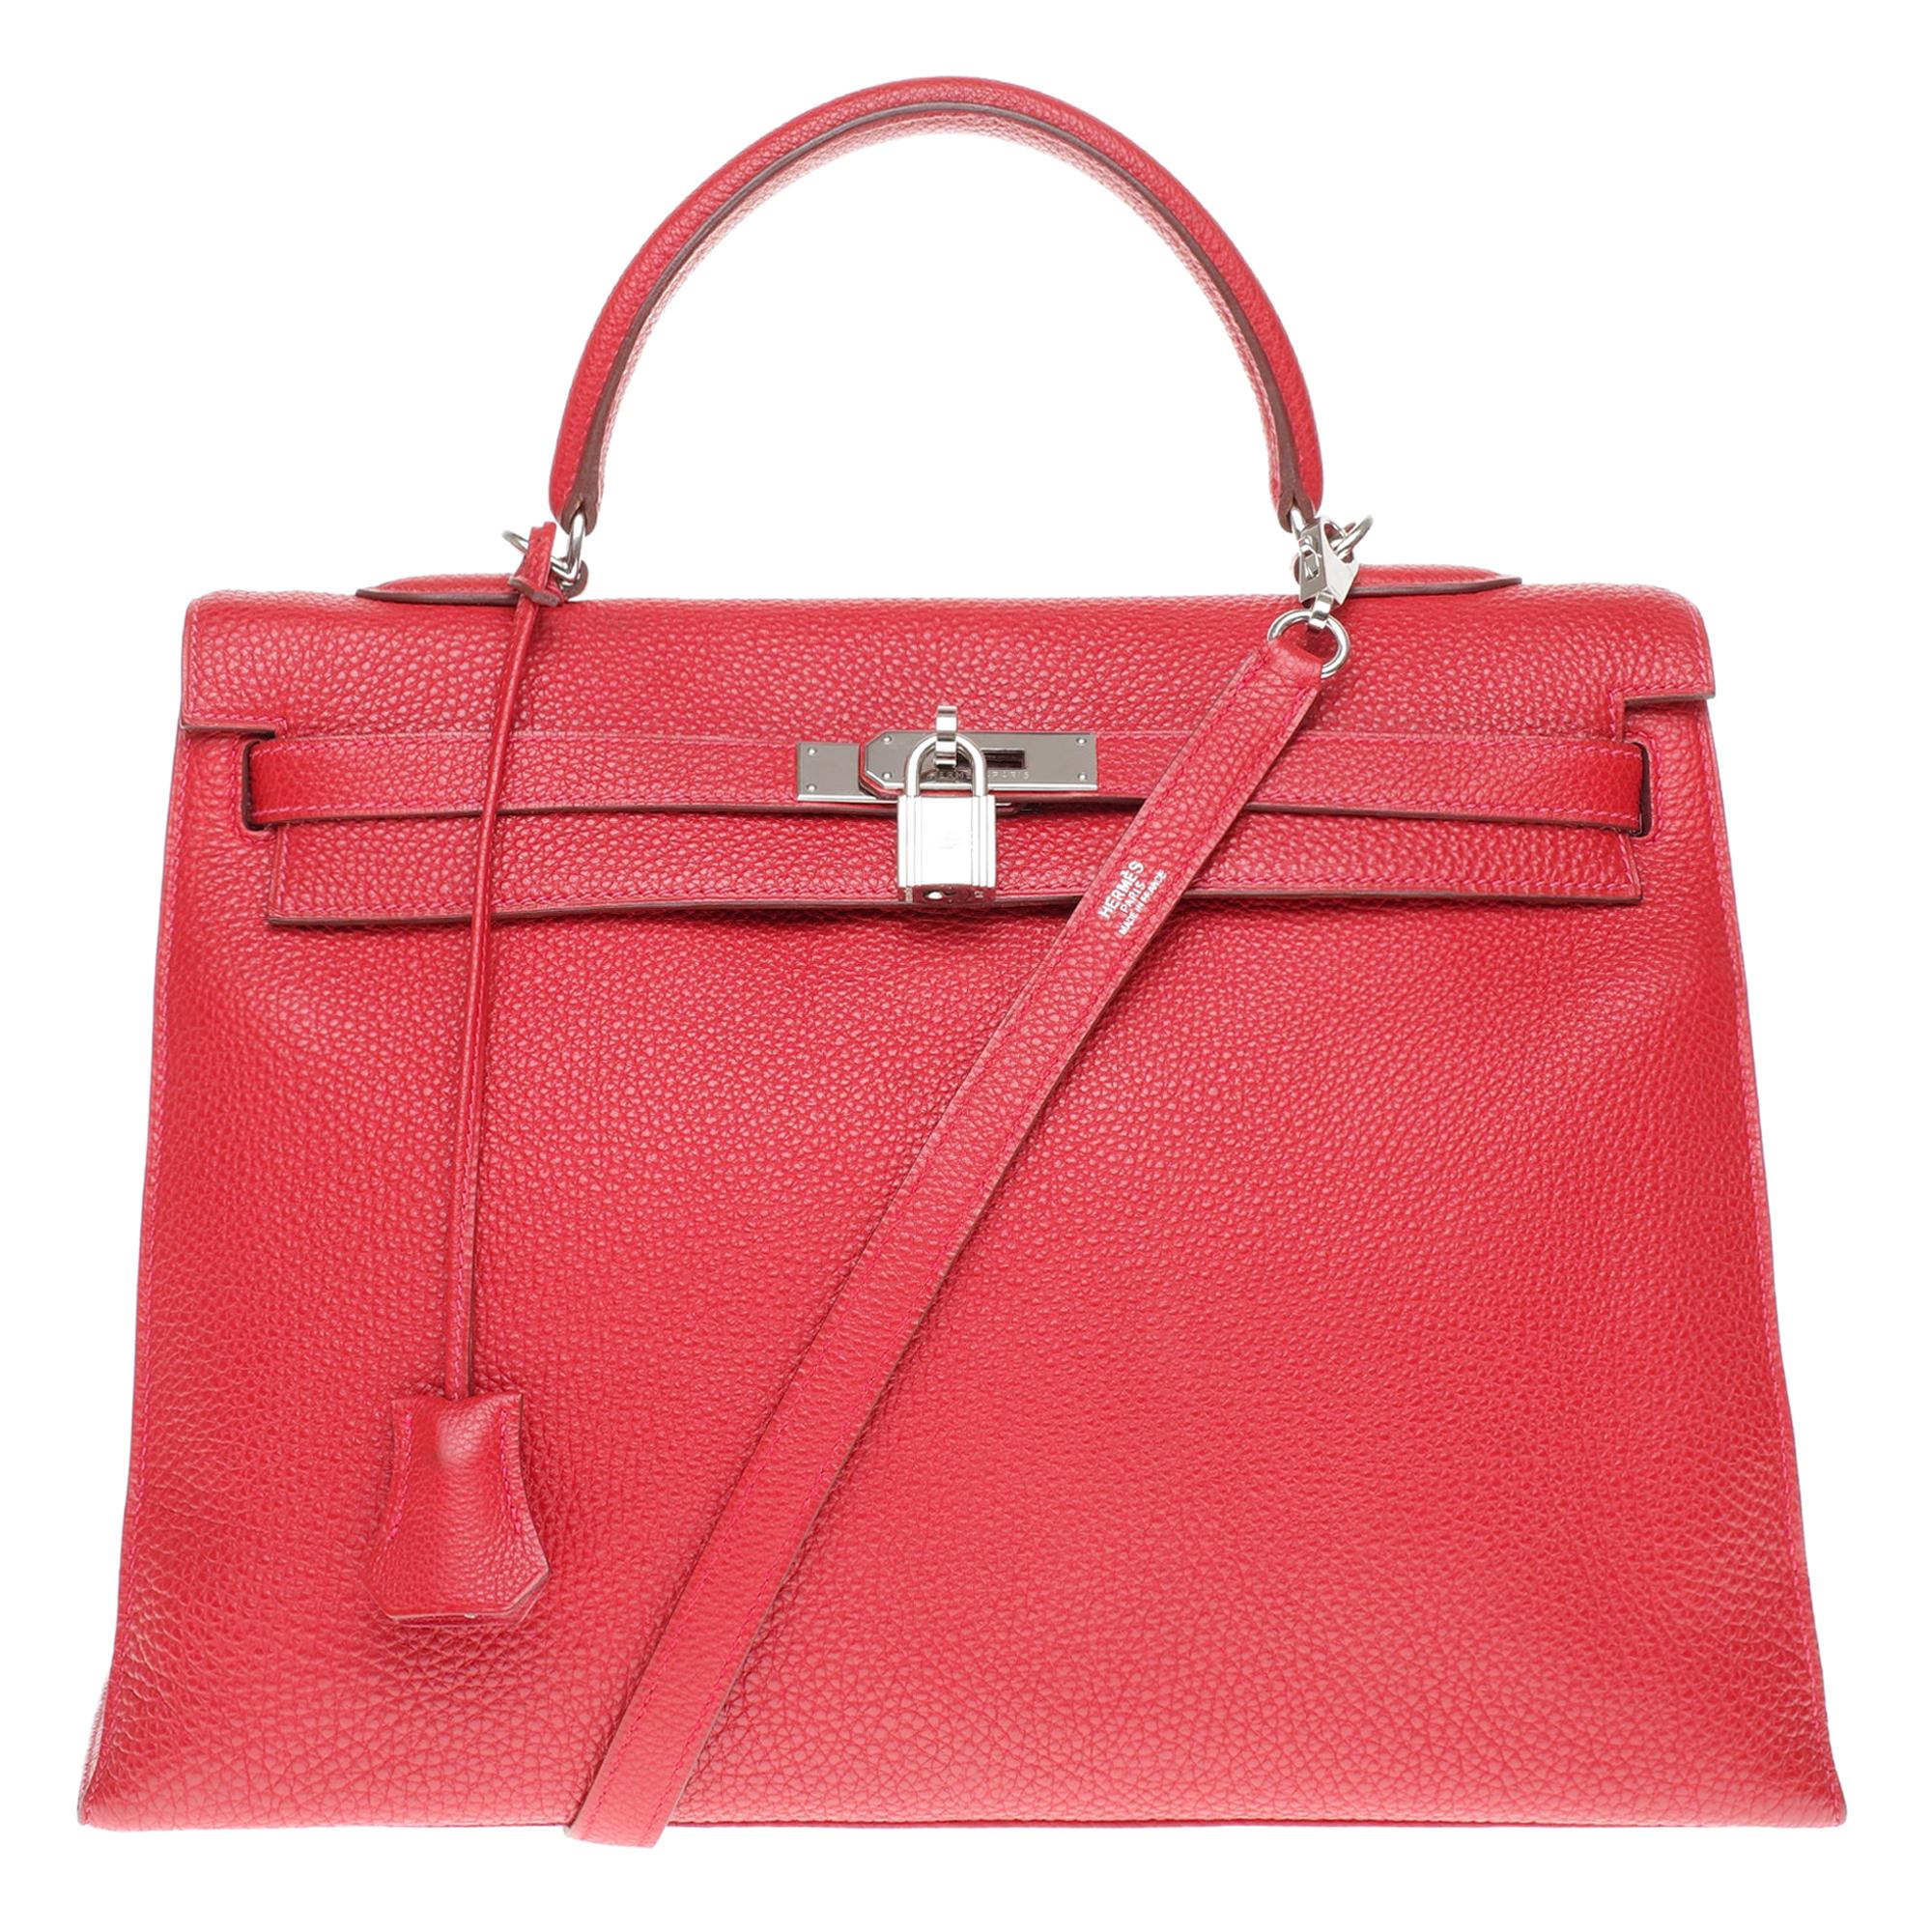 Rare Hermès Kelly 35 sellier shoulder bag in red togo leather, silver hardware